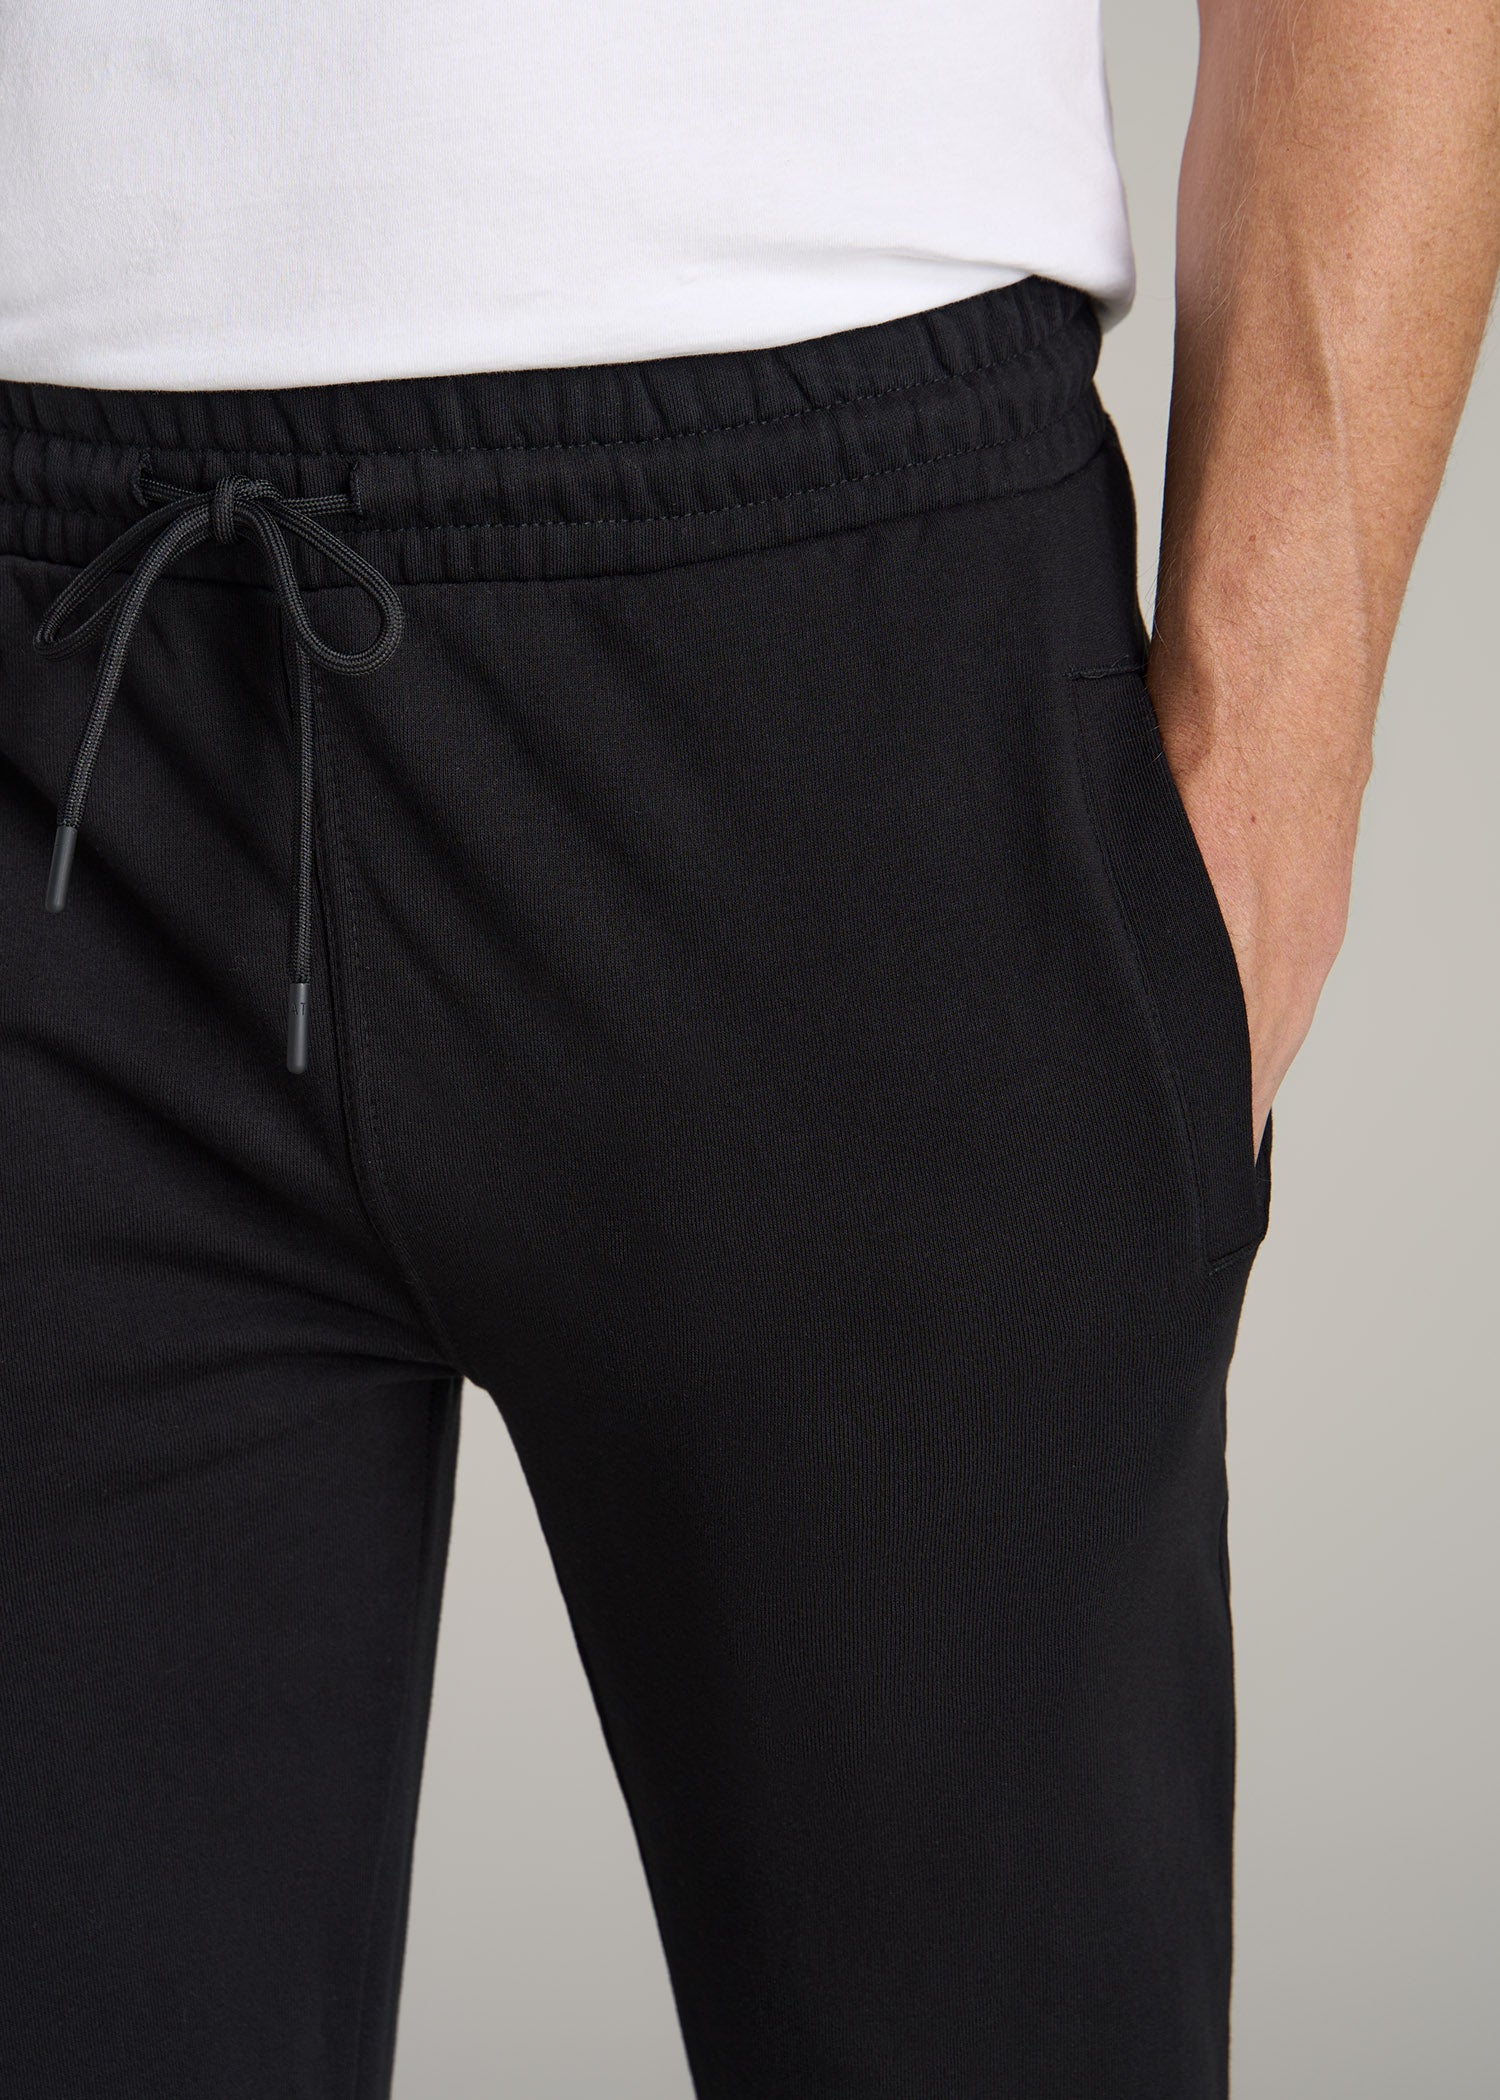 Men's Sweat Pants, Black